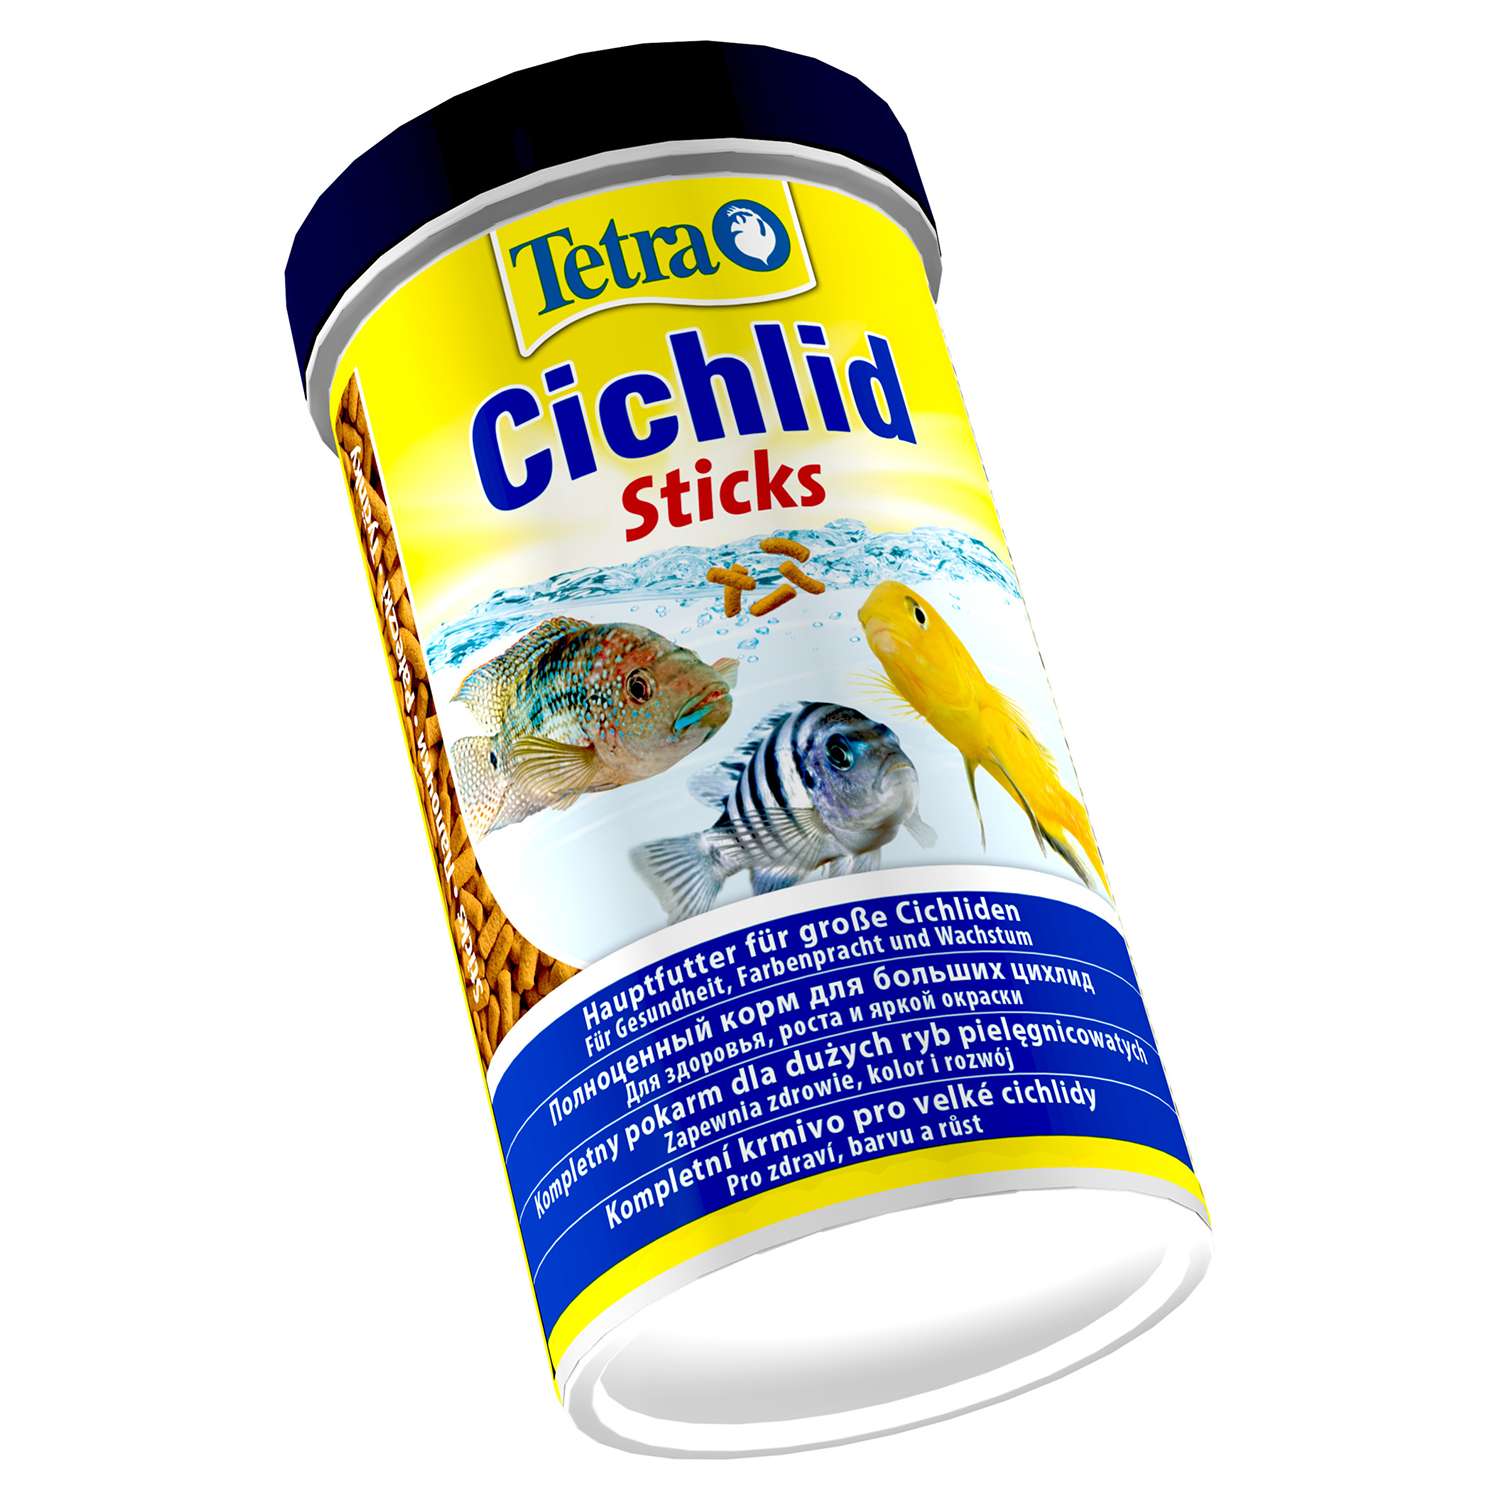 Корм для рыб Tetra Cichlid Sticks всех видов цихлид в палочках 500мл - фото 3